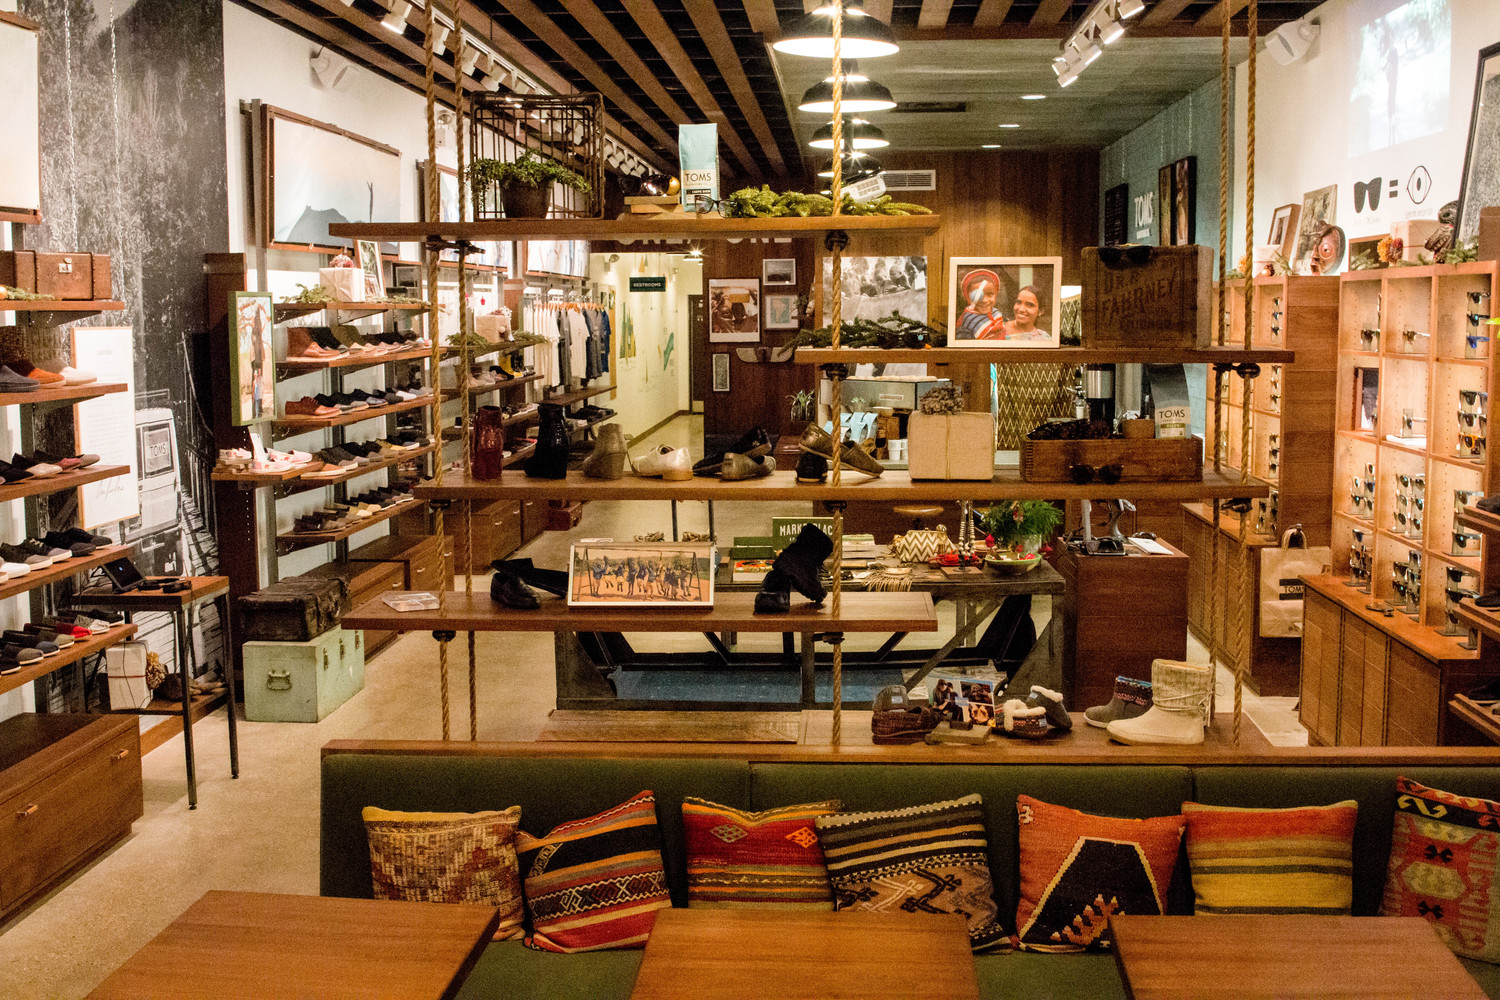 TOMS Shoes Retail Store + Cafe in Chicago Illinois by interior studio Wilder Design Co. — wilder design co.